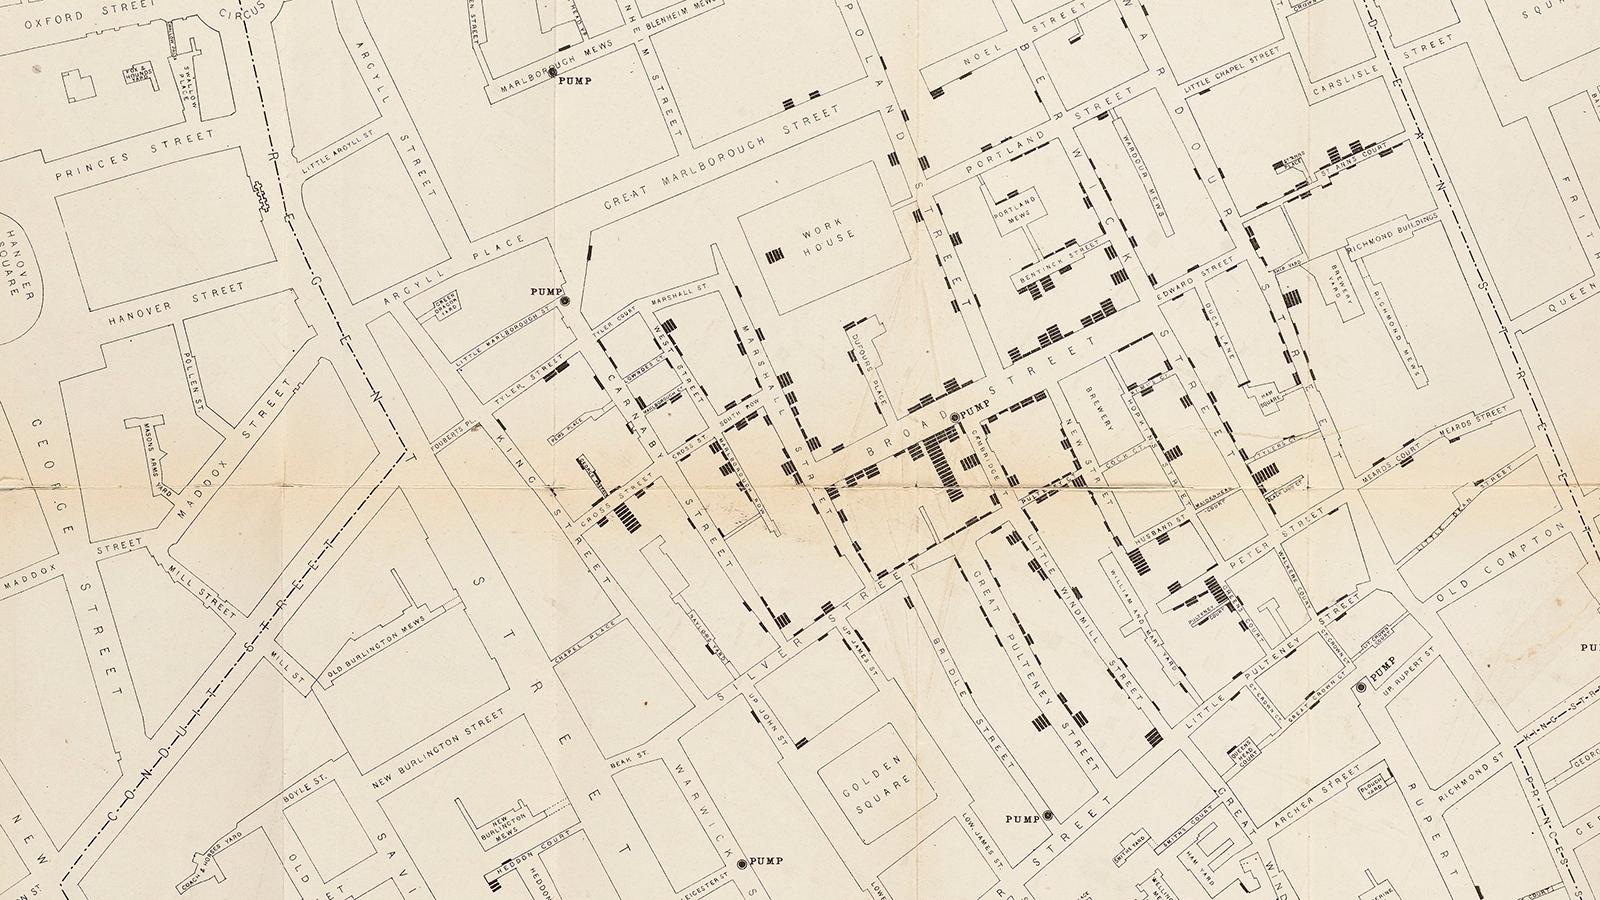 John Snow - Cholera Map; Photo credit: Wellcome Library, London